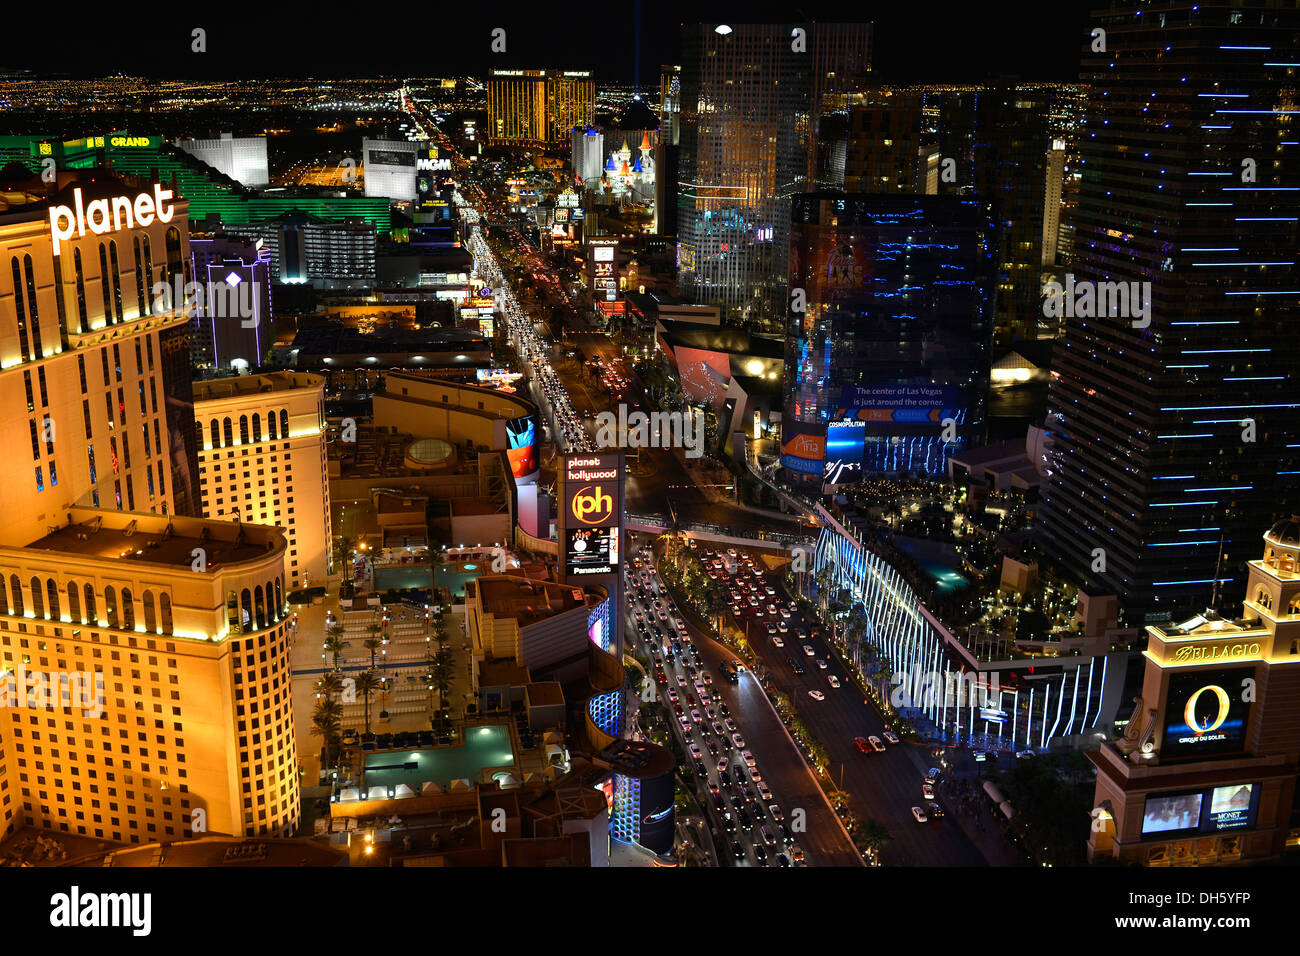 Night scene, The Strip, MGM Grand luxury hotel, Planet Hollywood, The Cosmopolitan, New York New York, Mandalay Bay, Excalibur Stock Photo